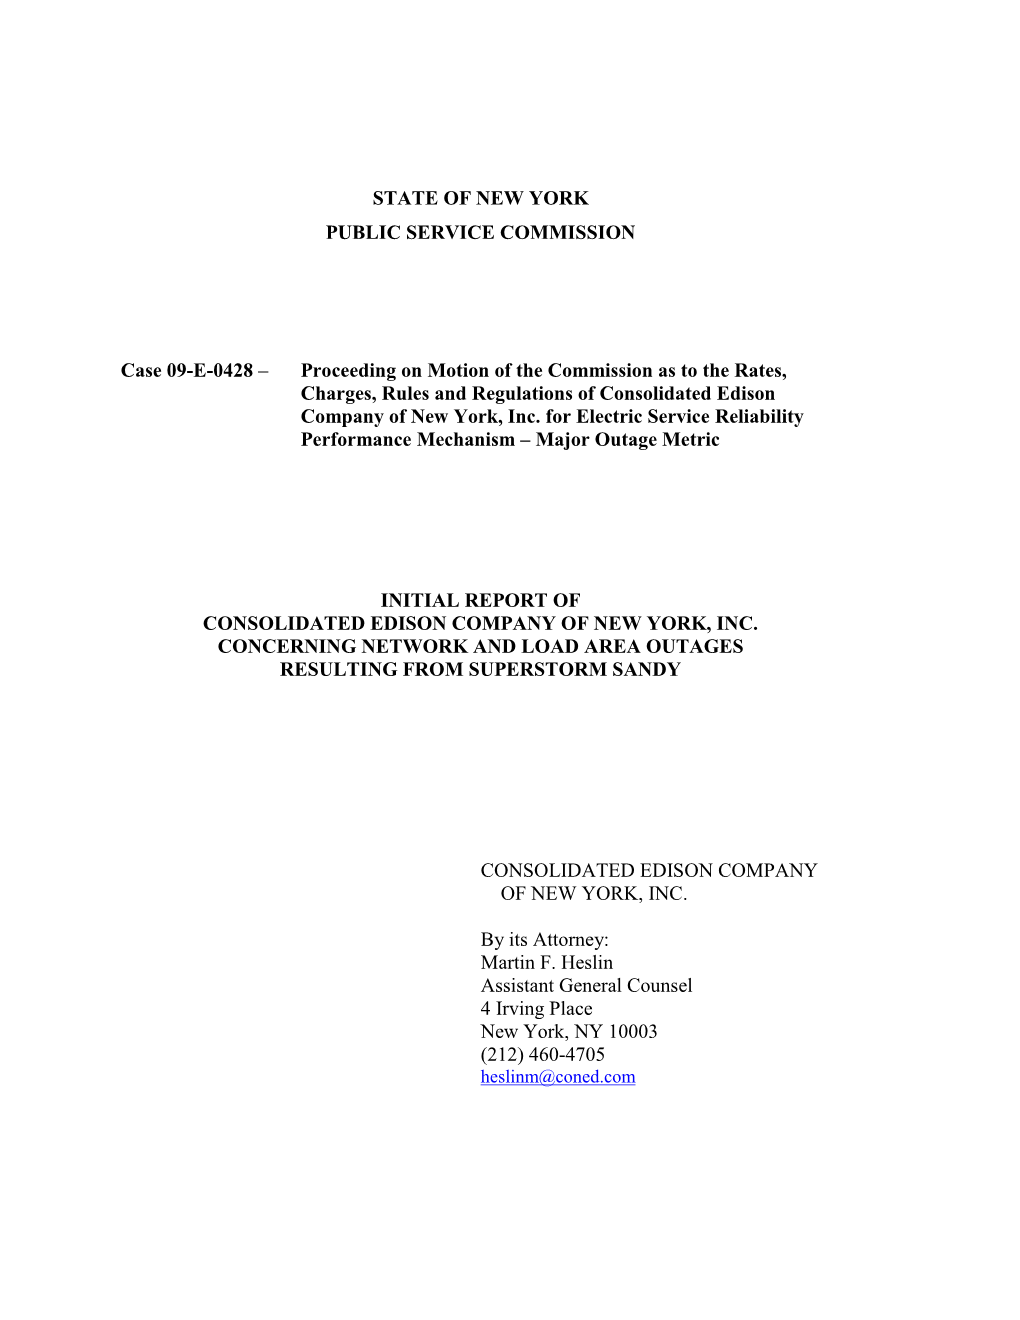 STATE of NEW YORK PUBLIC SERVICE COMMISSION Case 09-E-0428